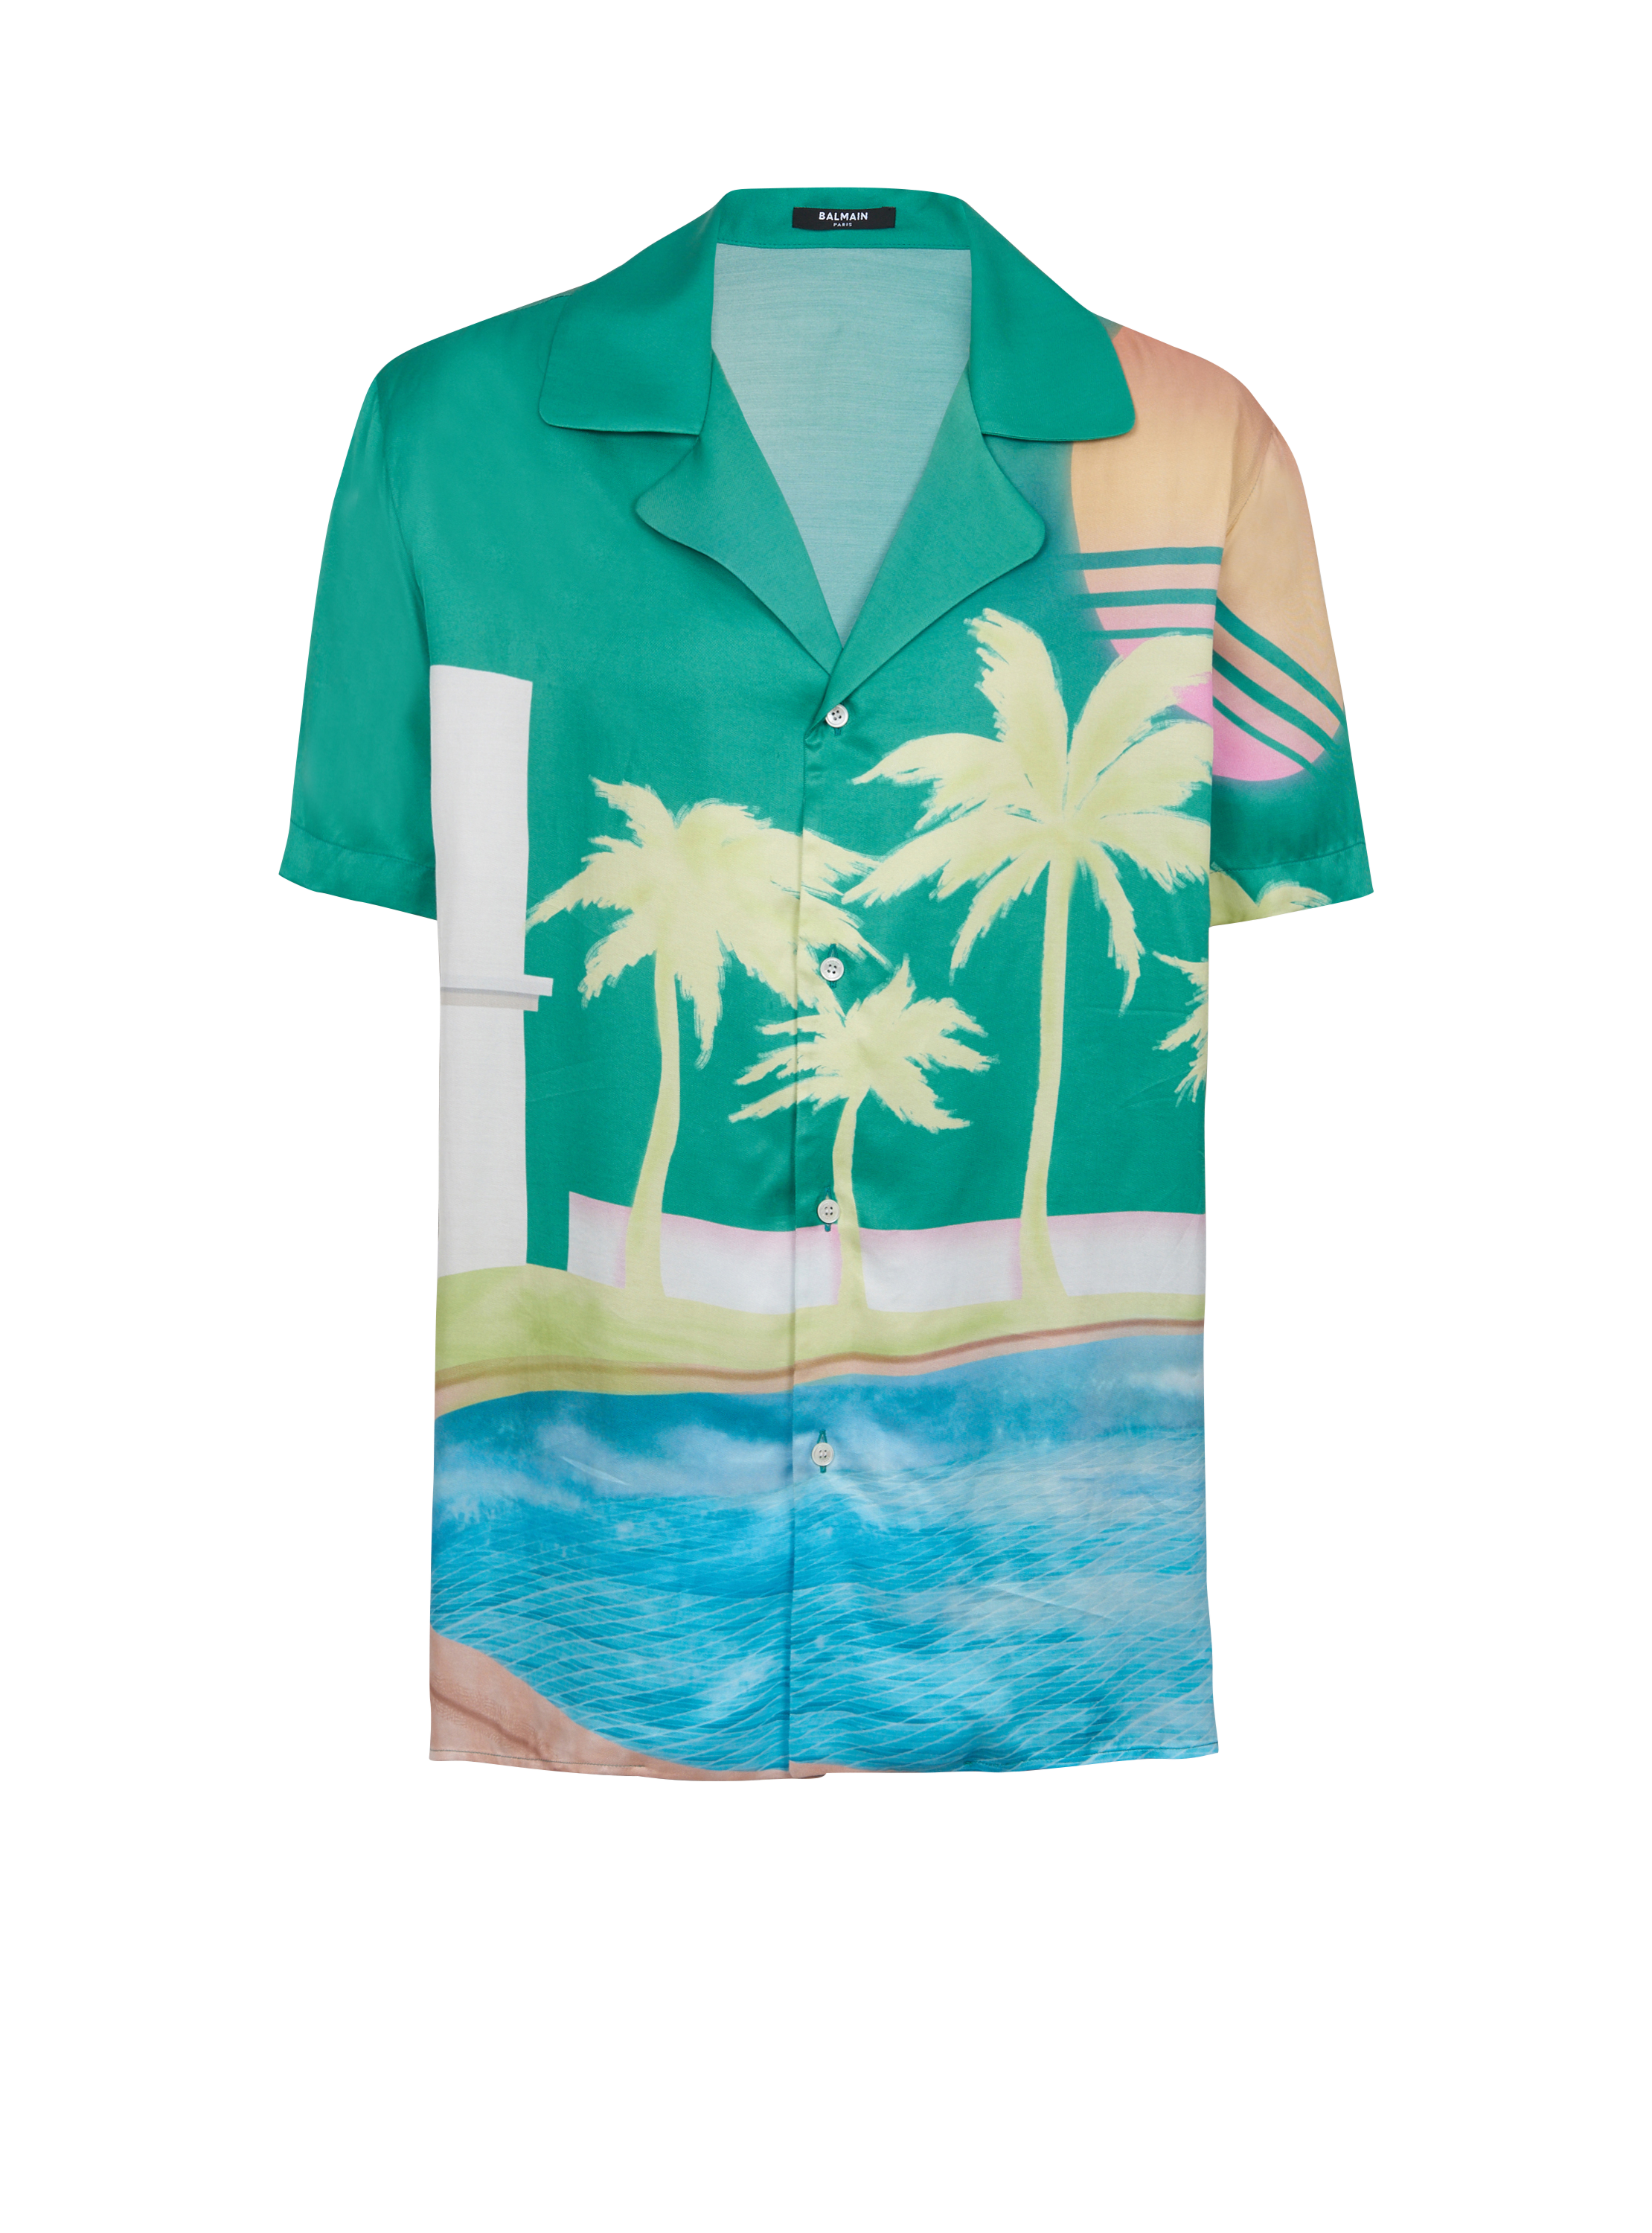 Short-sleeved twill pyjama shirt with palm tree print